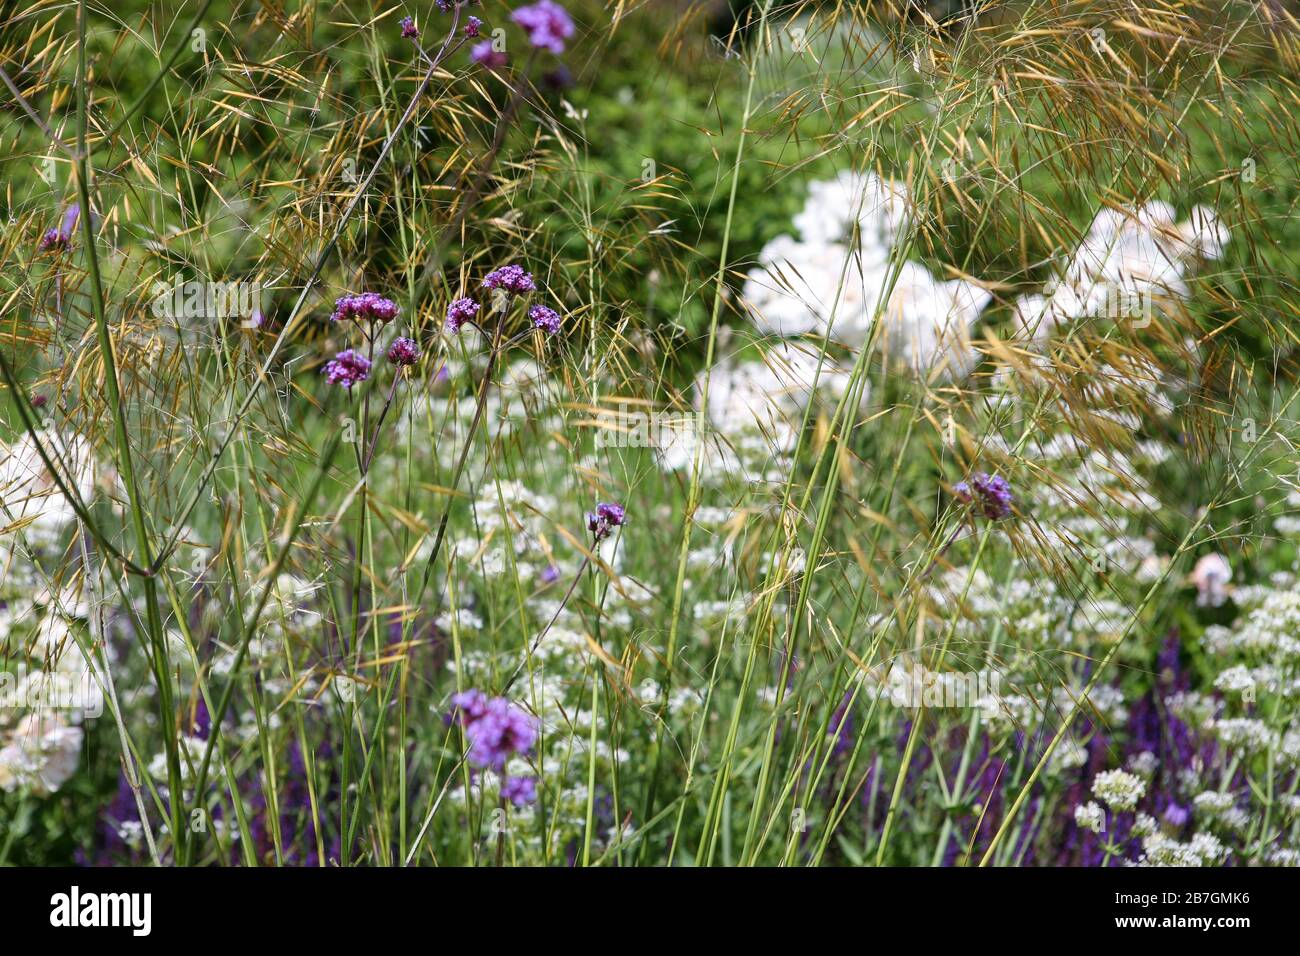 Verbena bonariensis and Stipa gigantea in a purple and white planting scheme herbaceous border Stock Photo